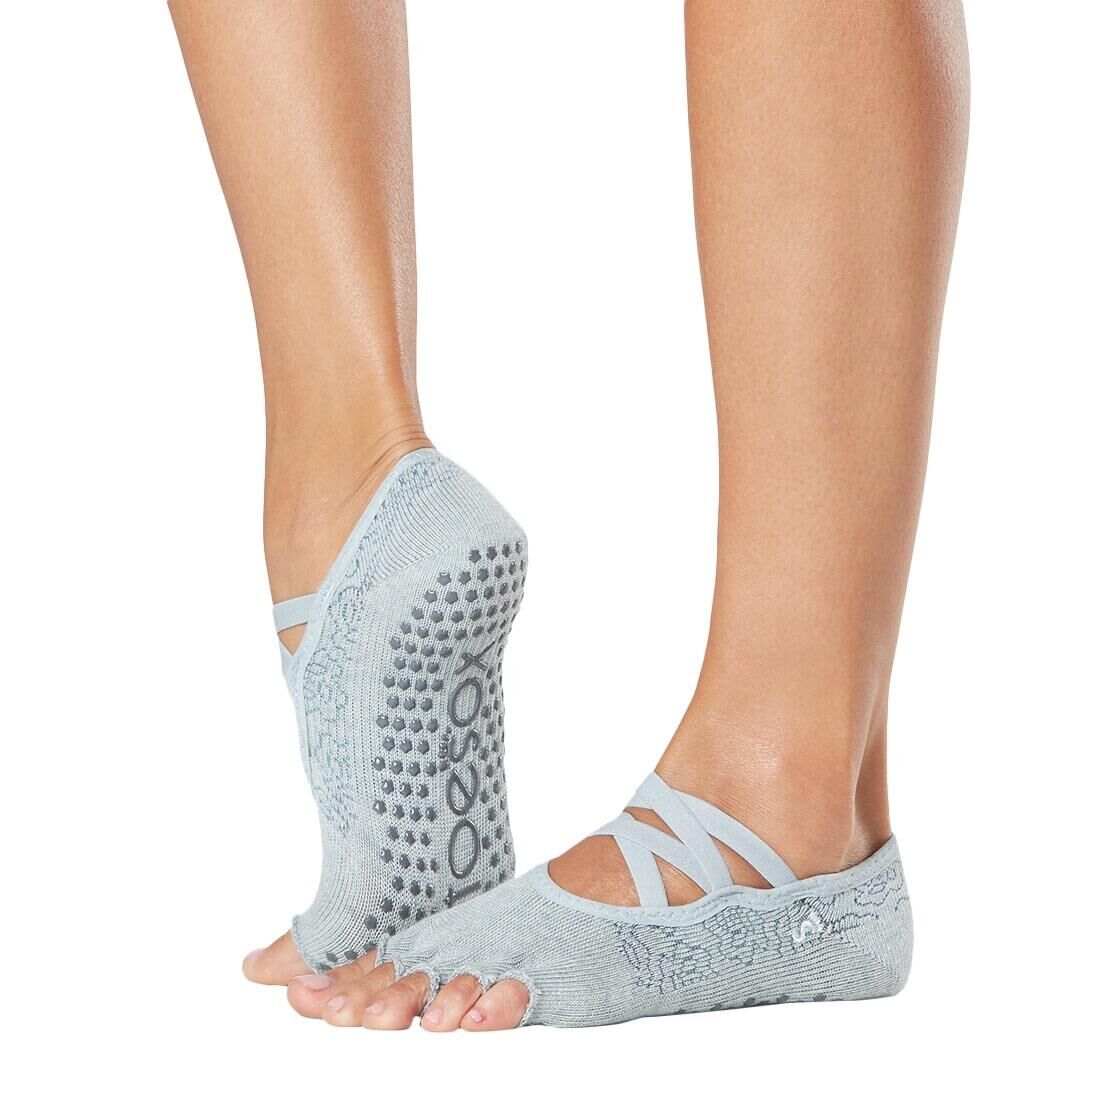 Myga Yoga Socks - Non-Slip Gel Grip Socks perfect for Yoga, Pilates